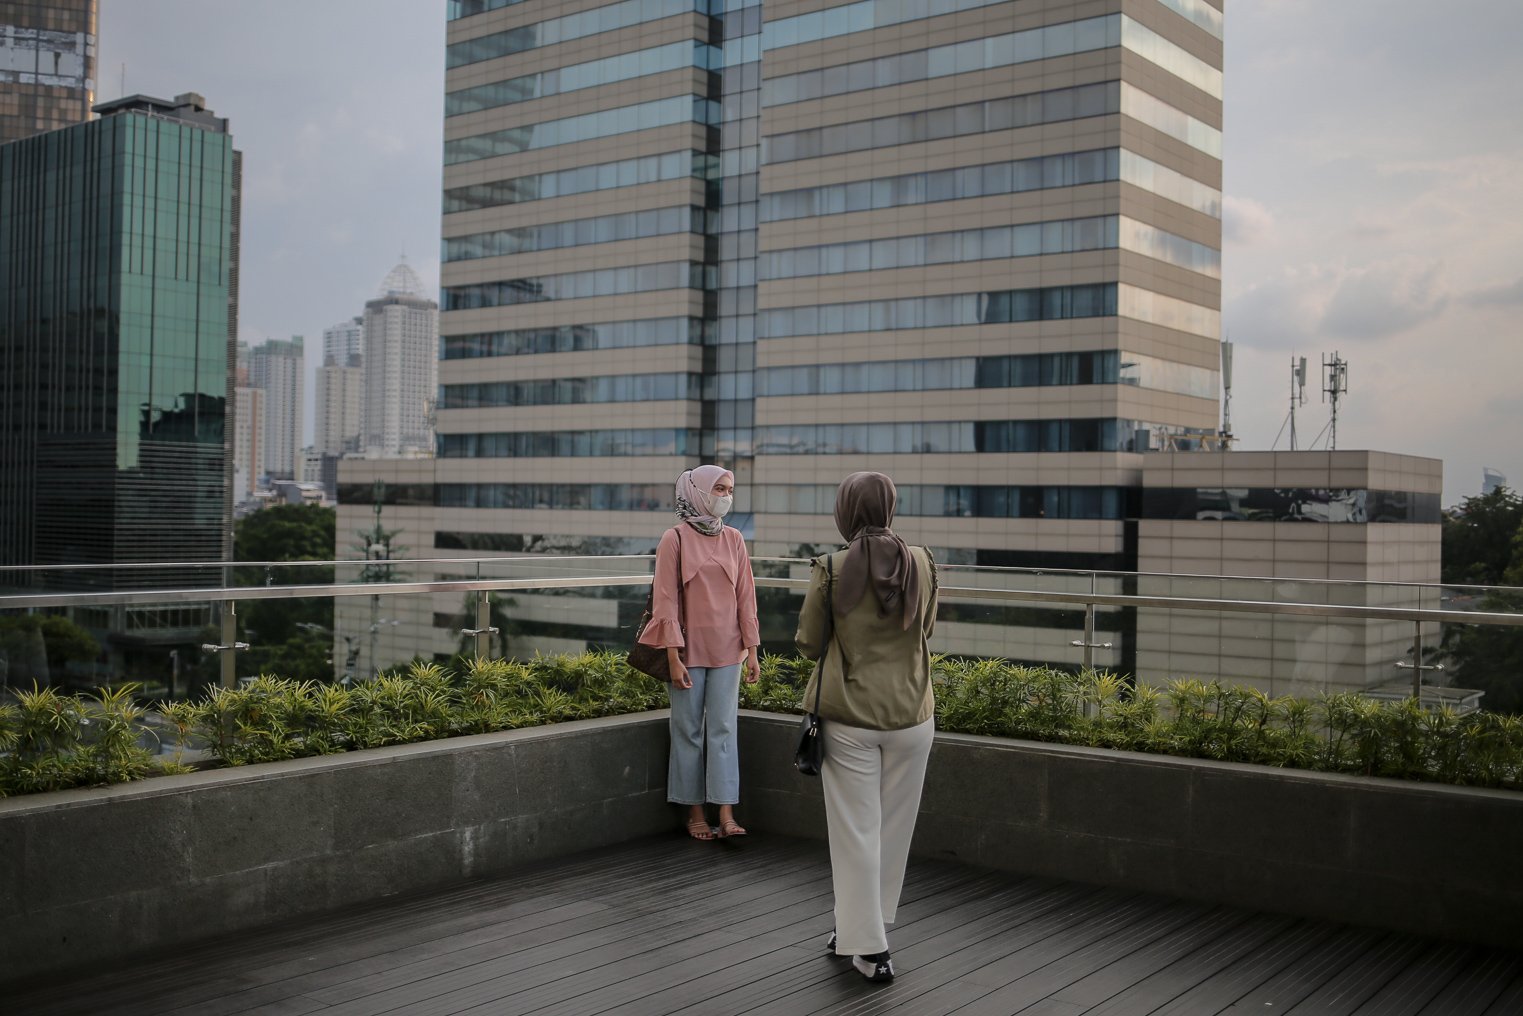 Pengunjung ber-swafoto saat menanti waktu berbuka puasa di Sky Deck Sarinah, Jakarta, Senin (18/4/2022). Kawasan tersebut menjadi salah satu destinasi baru bagi warga Jakarta dan sekitarnya untuk menanti waktu berbuka puasa atau ngabuburit bersama keluarga dan kerabat.